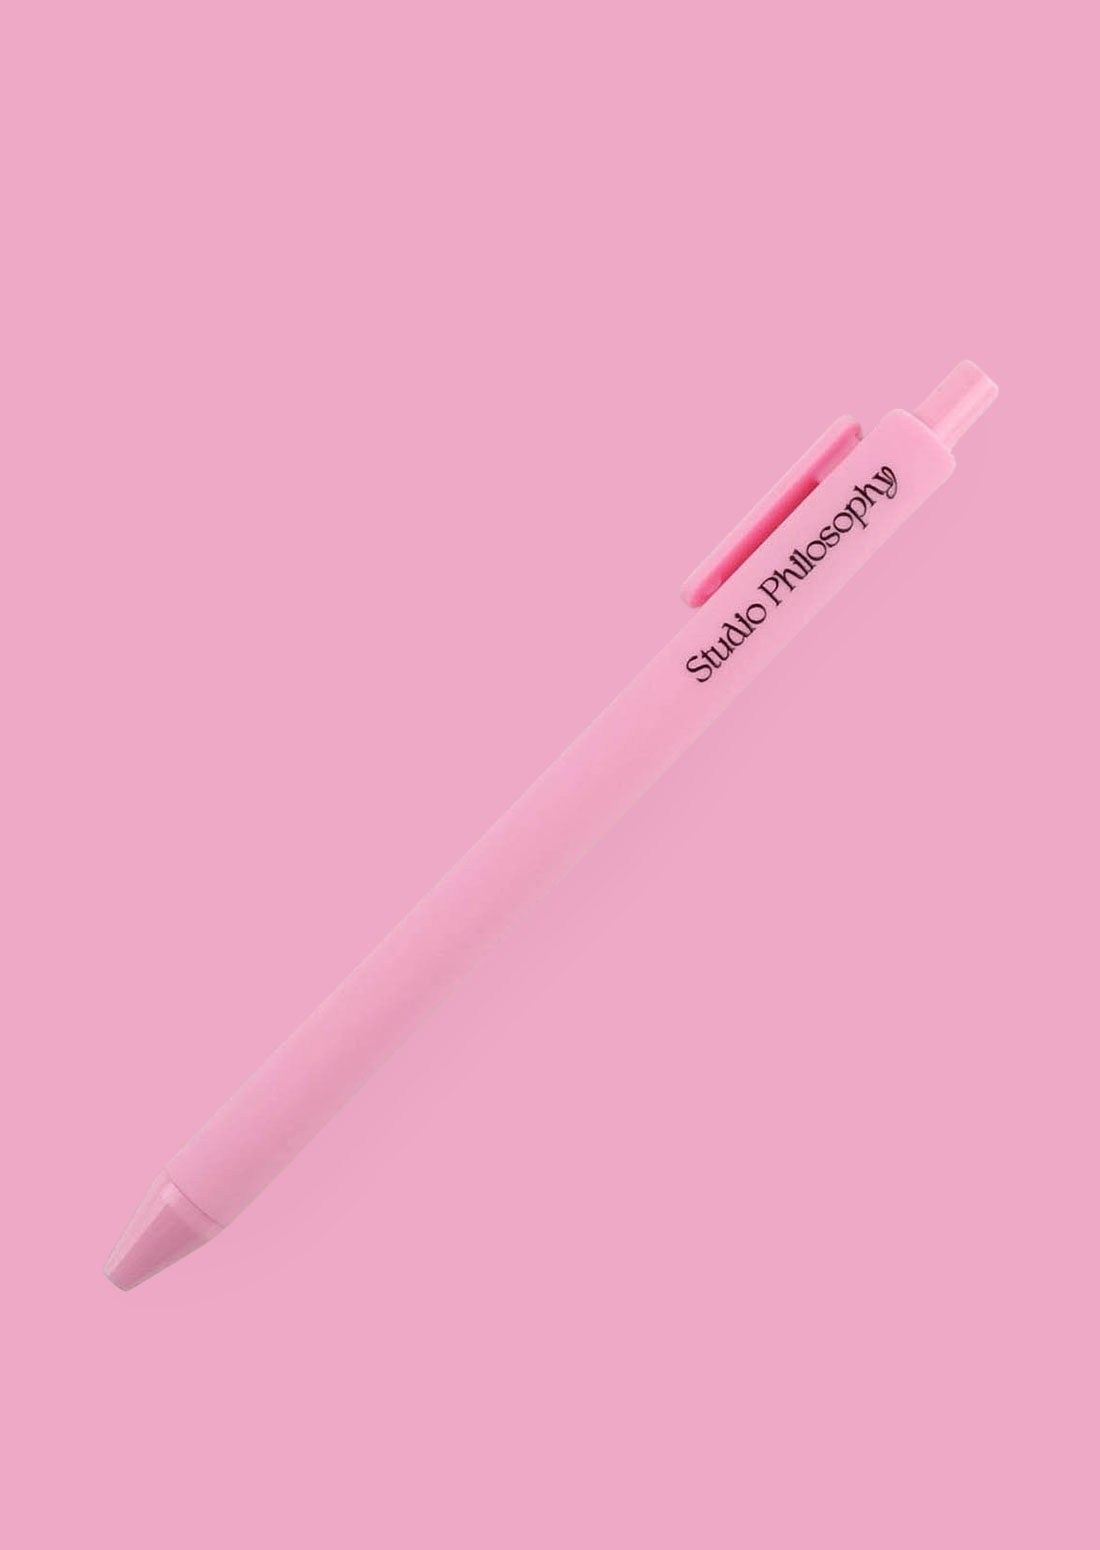 Pink Pen